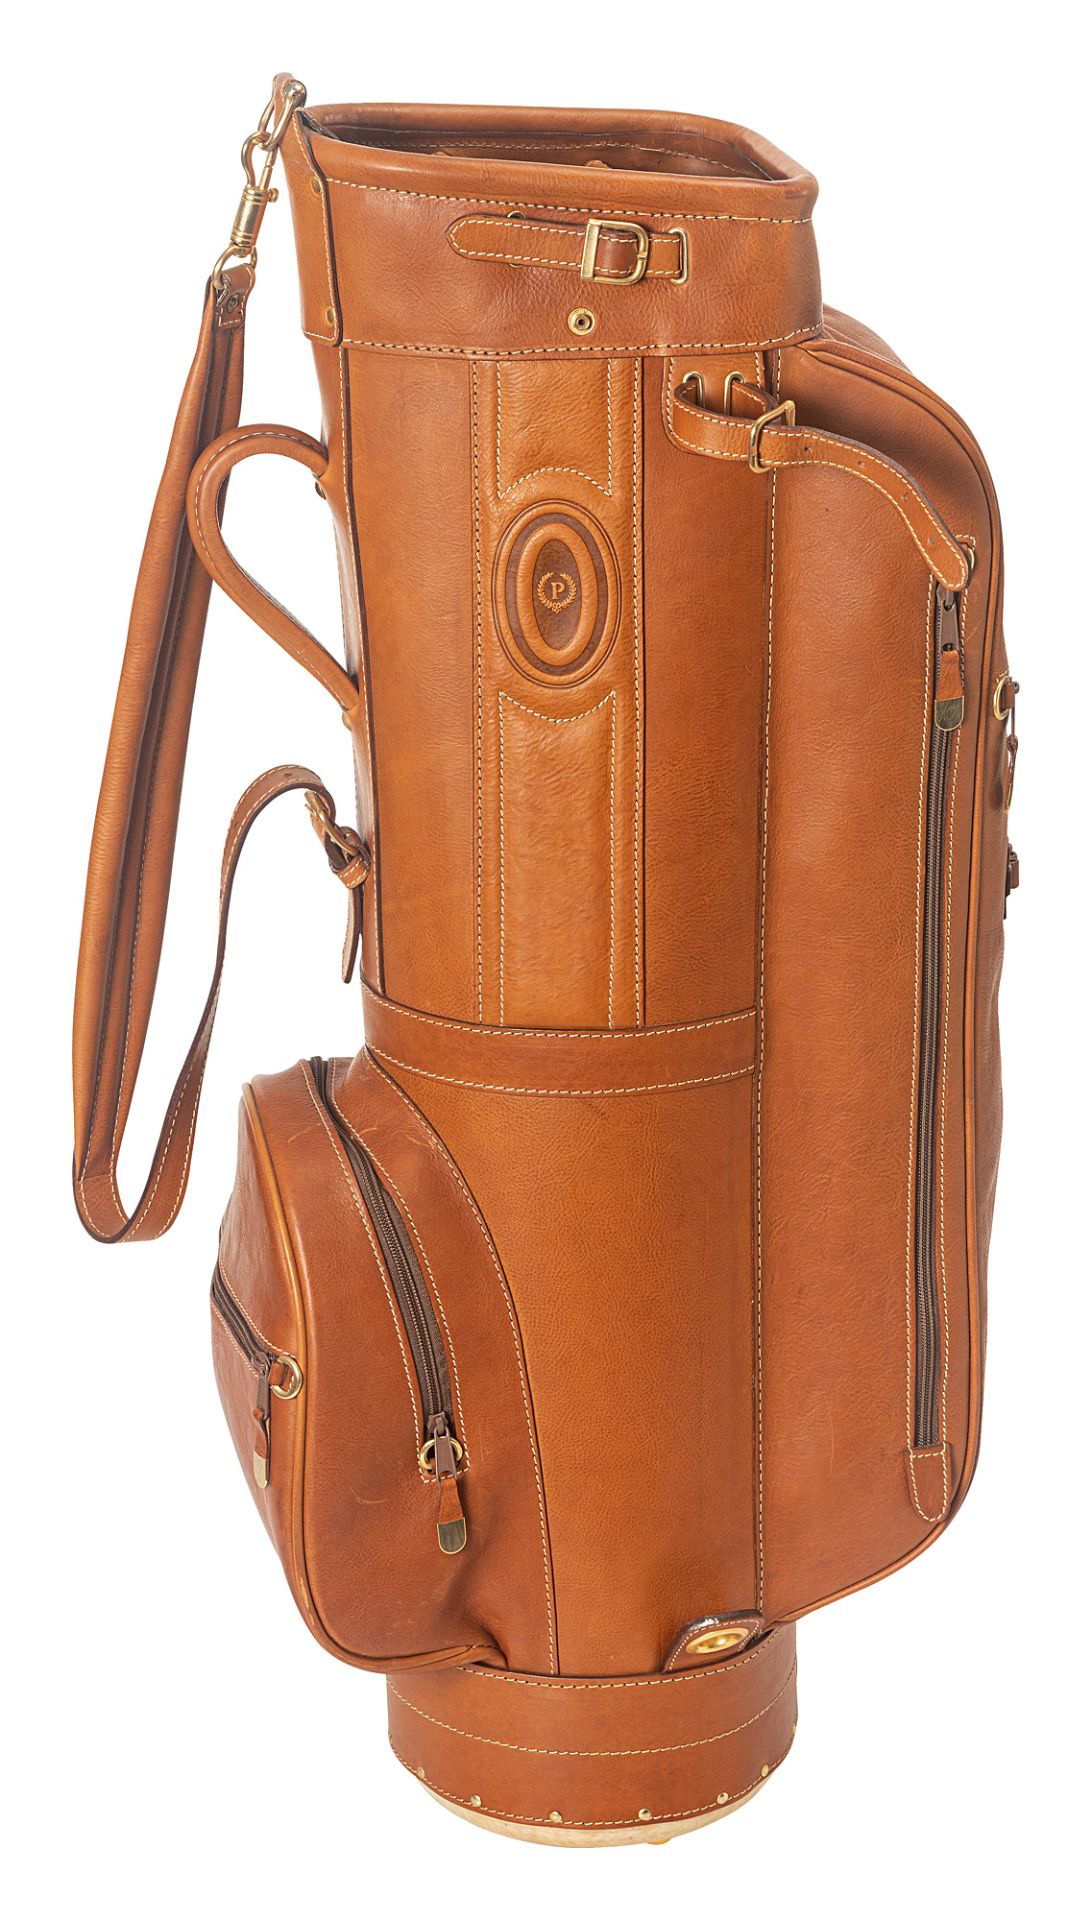 Pollini vintage leather golf bag - Image 3 of 4